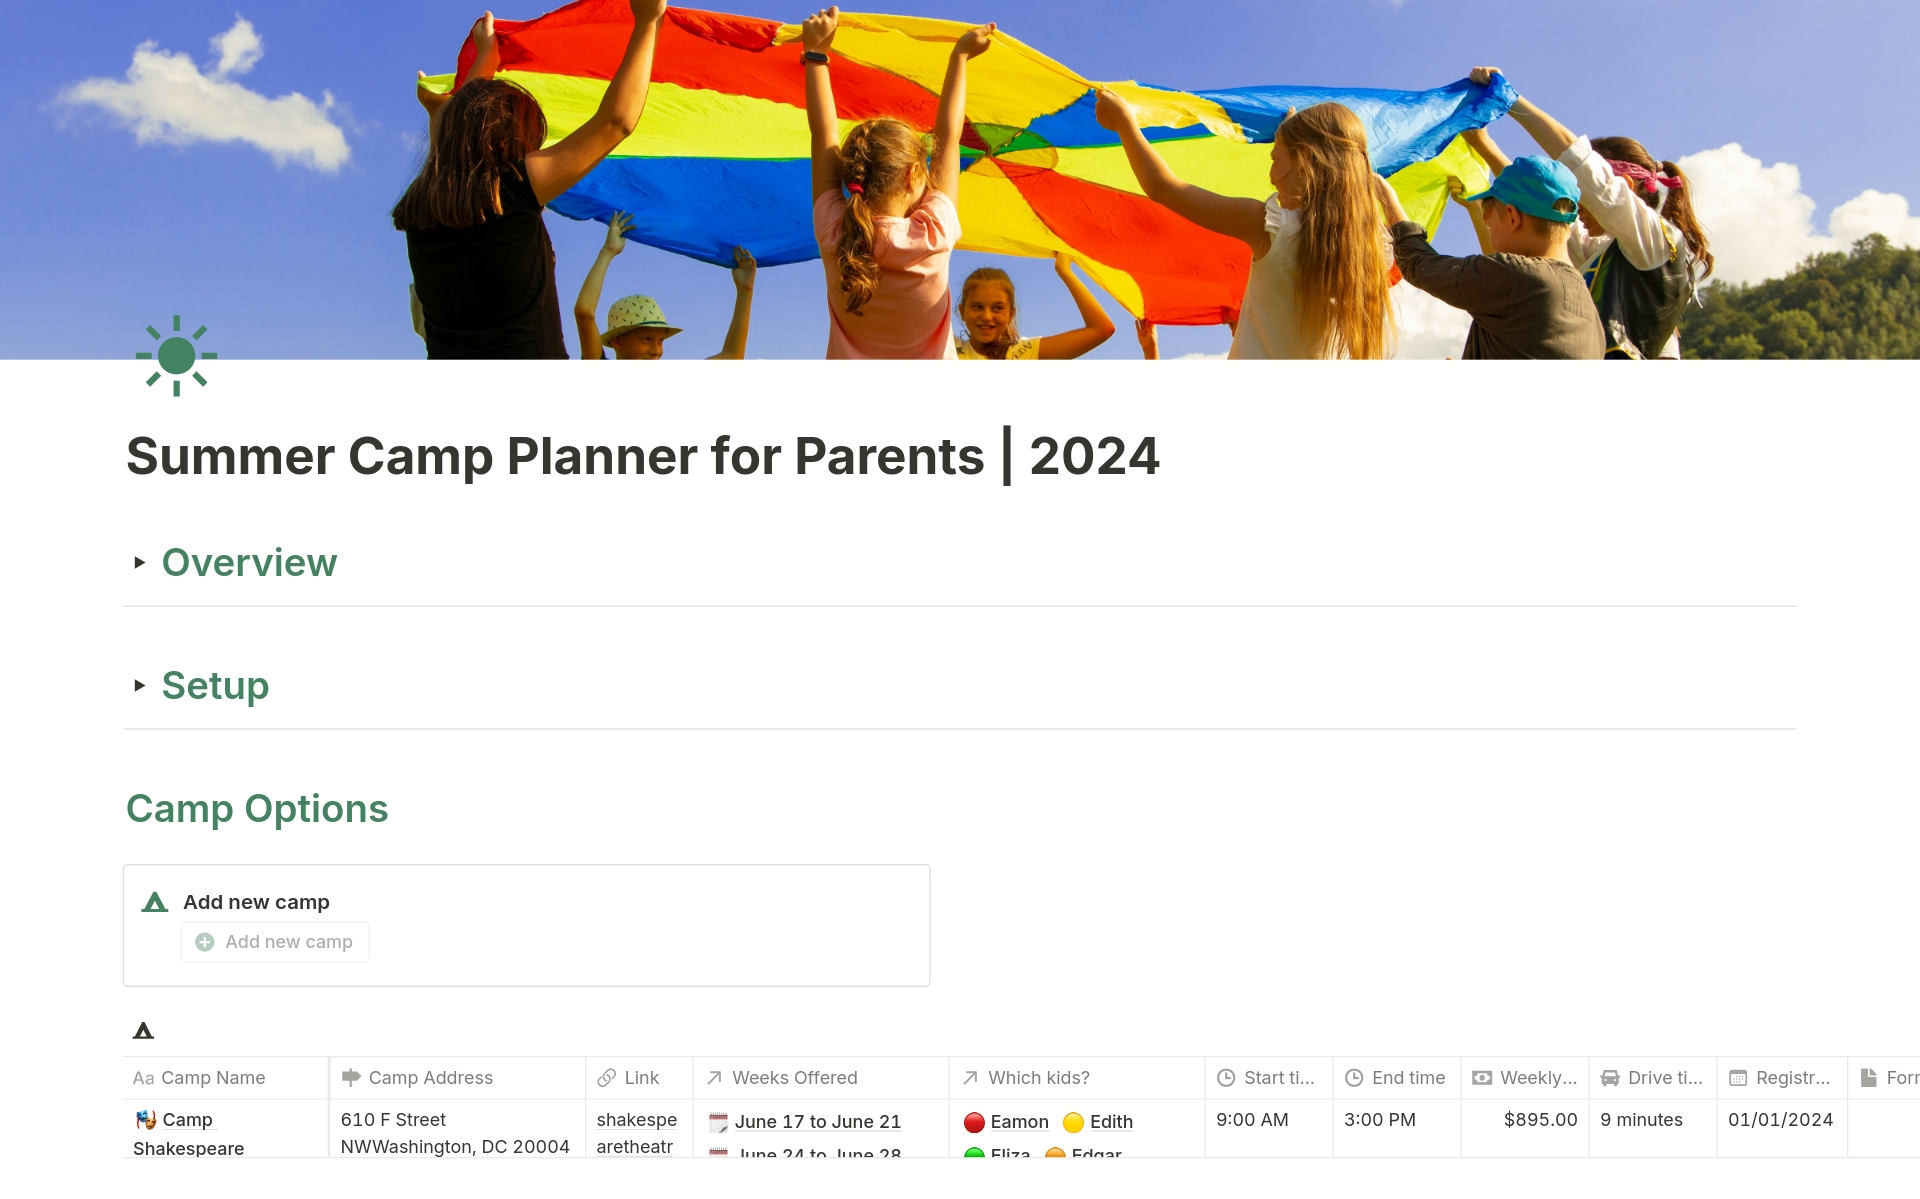 Summer Camp Planner for Parents님의 템플릿 미리보기